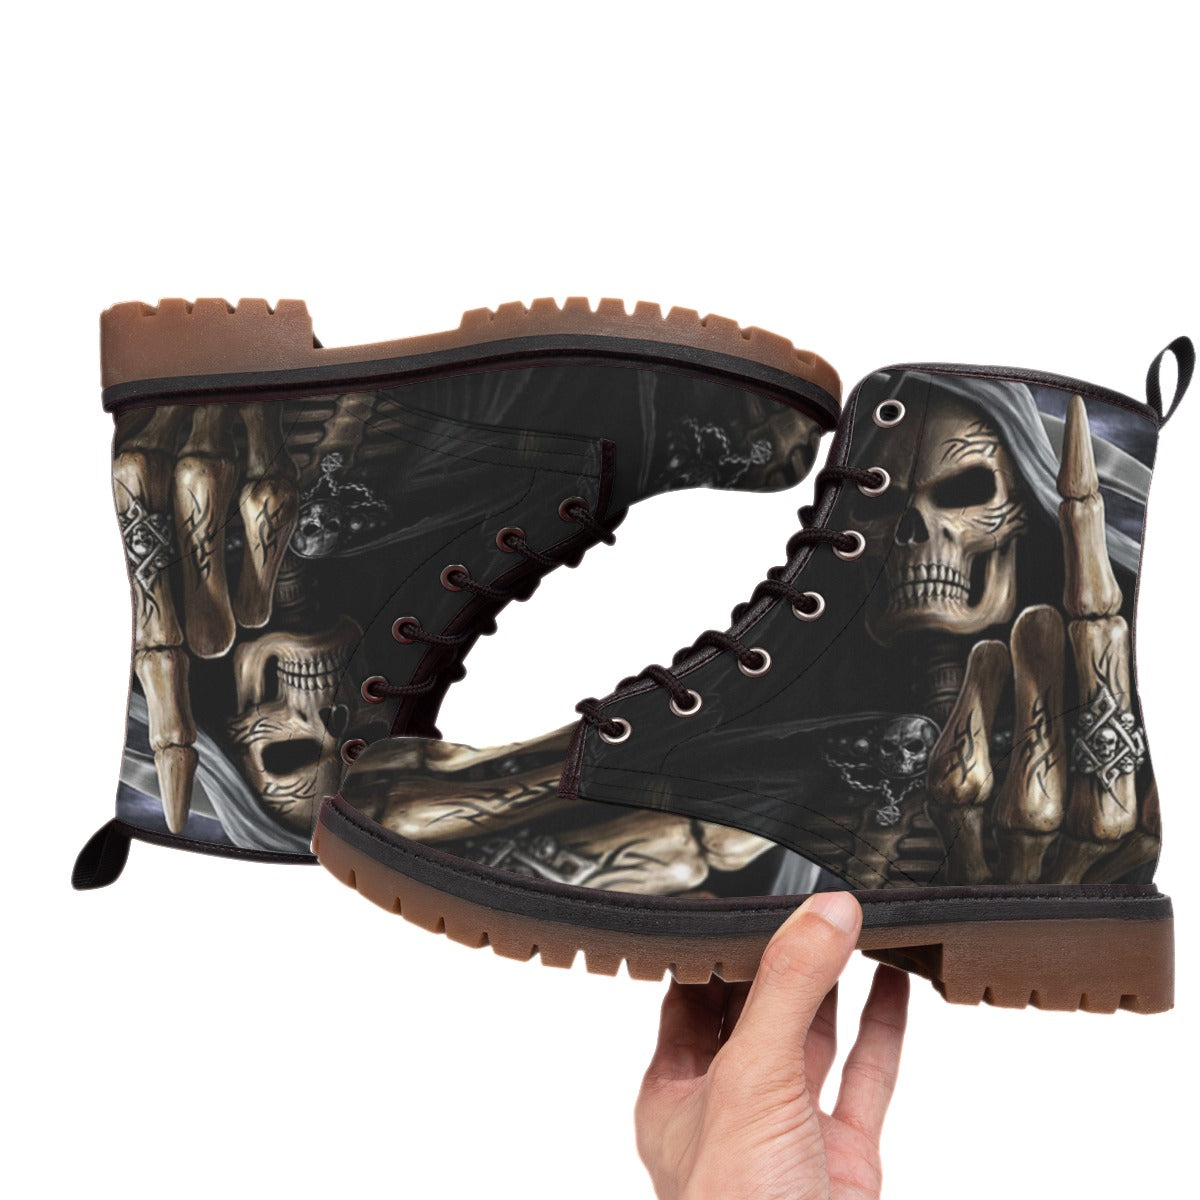 Grim reaper horror skull Halloween Women's Men's Short Boots, Gothic skull boots shoes for adult